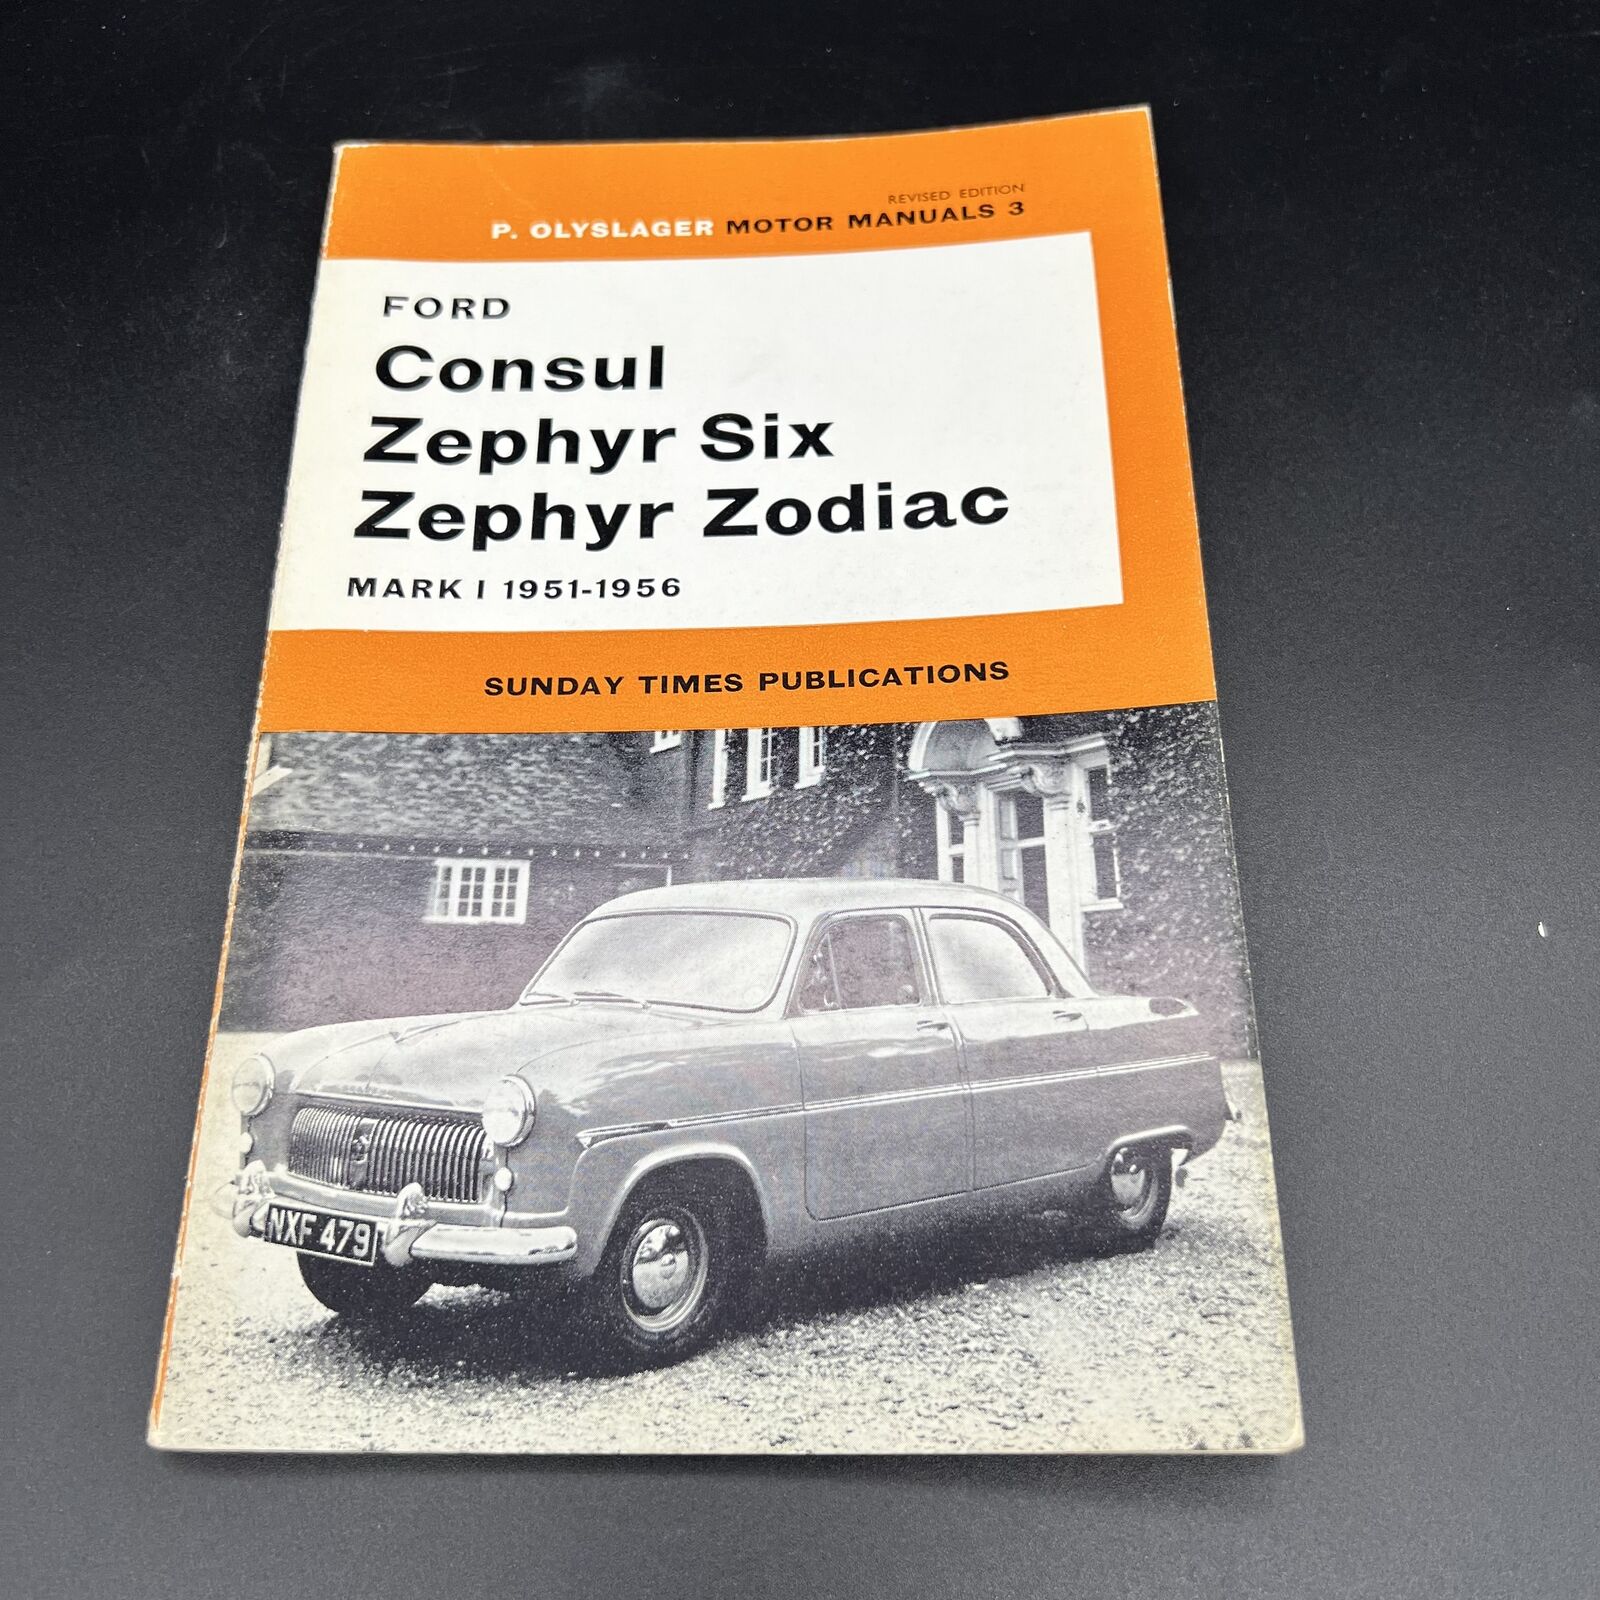 P. Olyslager Motor Manual-Ford Consul Zephyr Six, zephyr Zodiac Mark I 1951-1956